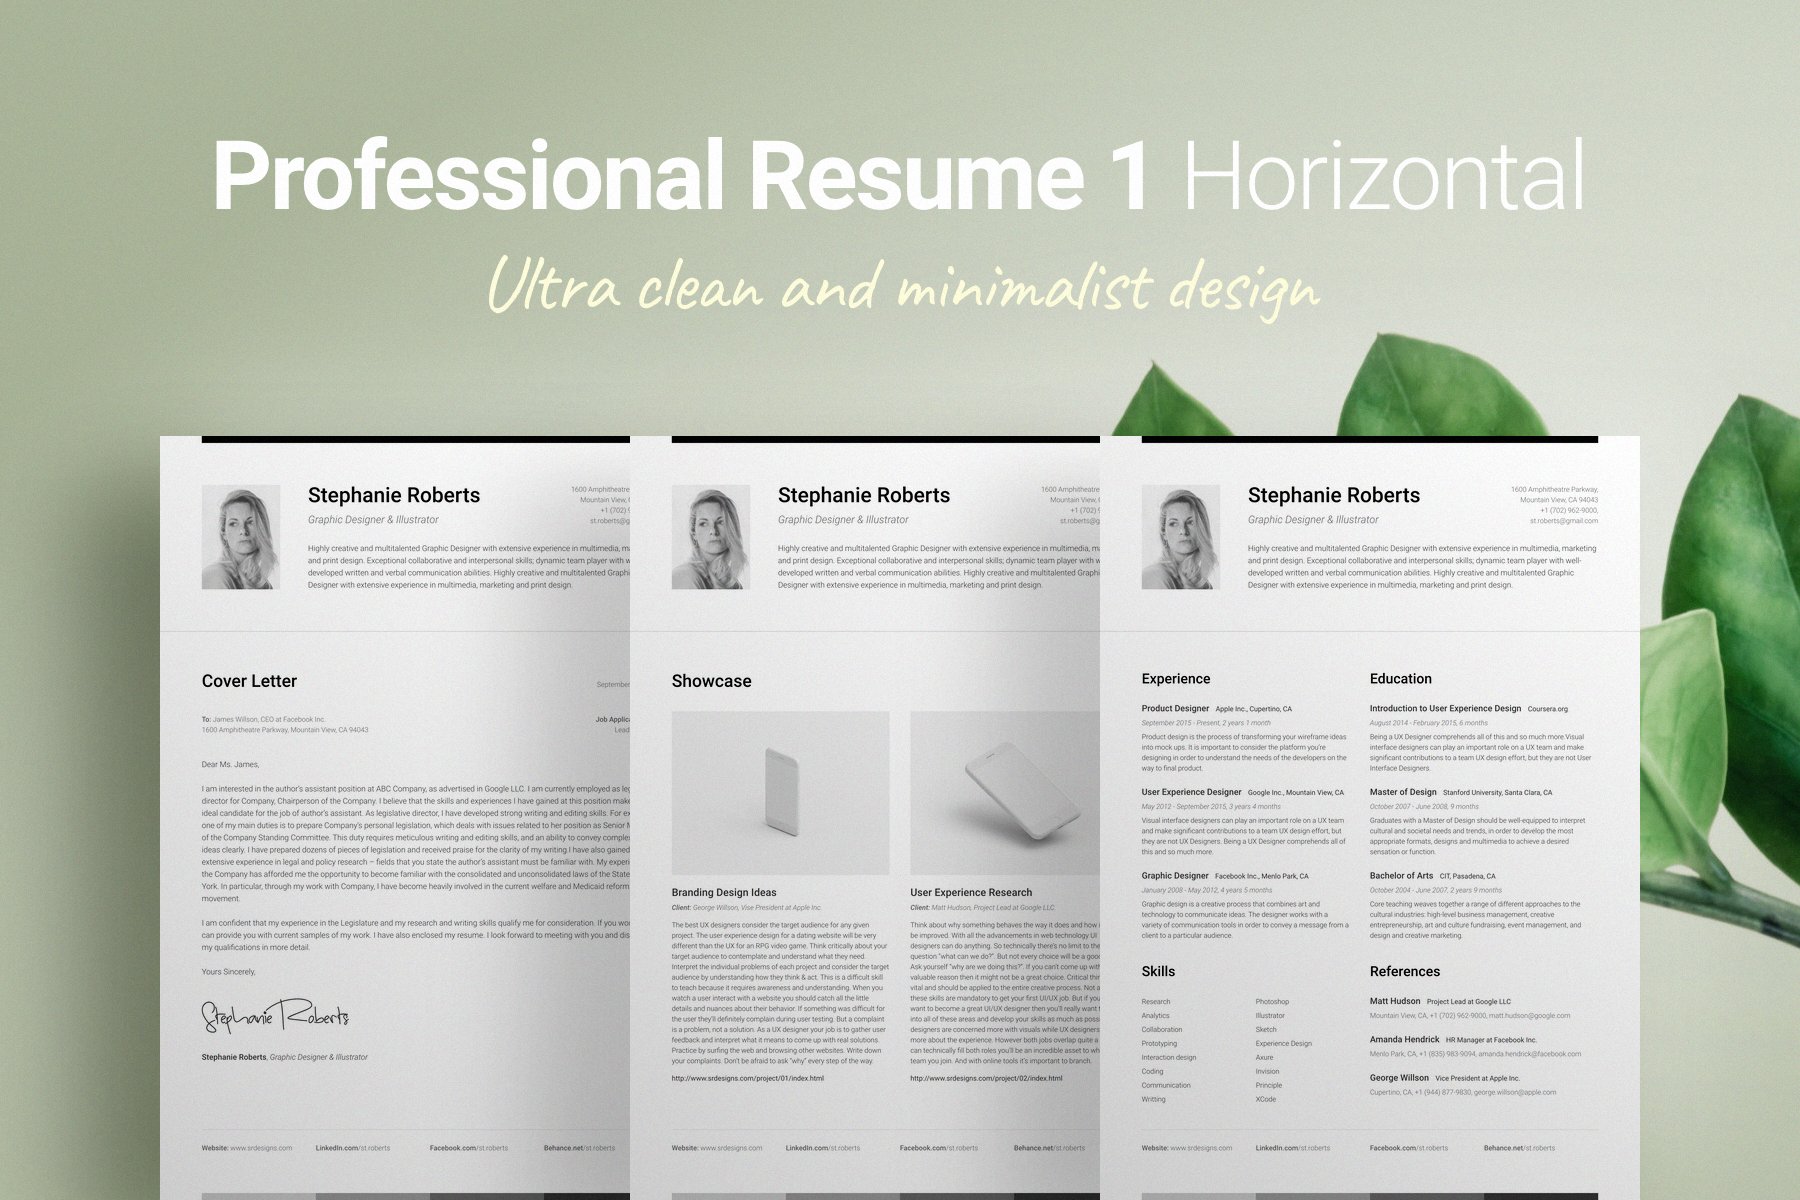 Resume & CV Bundle 1 Horizontal cover image.